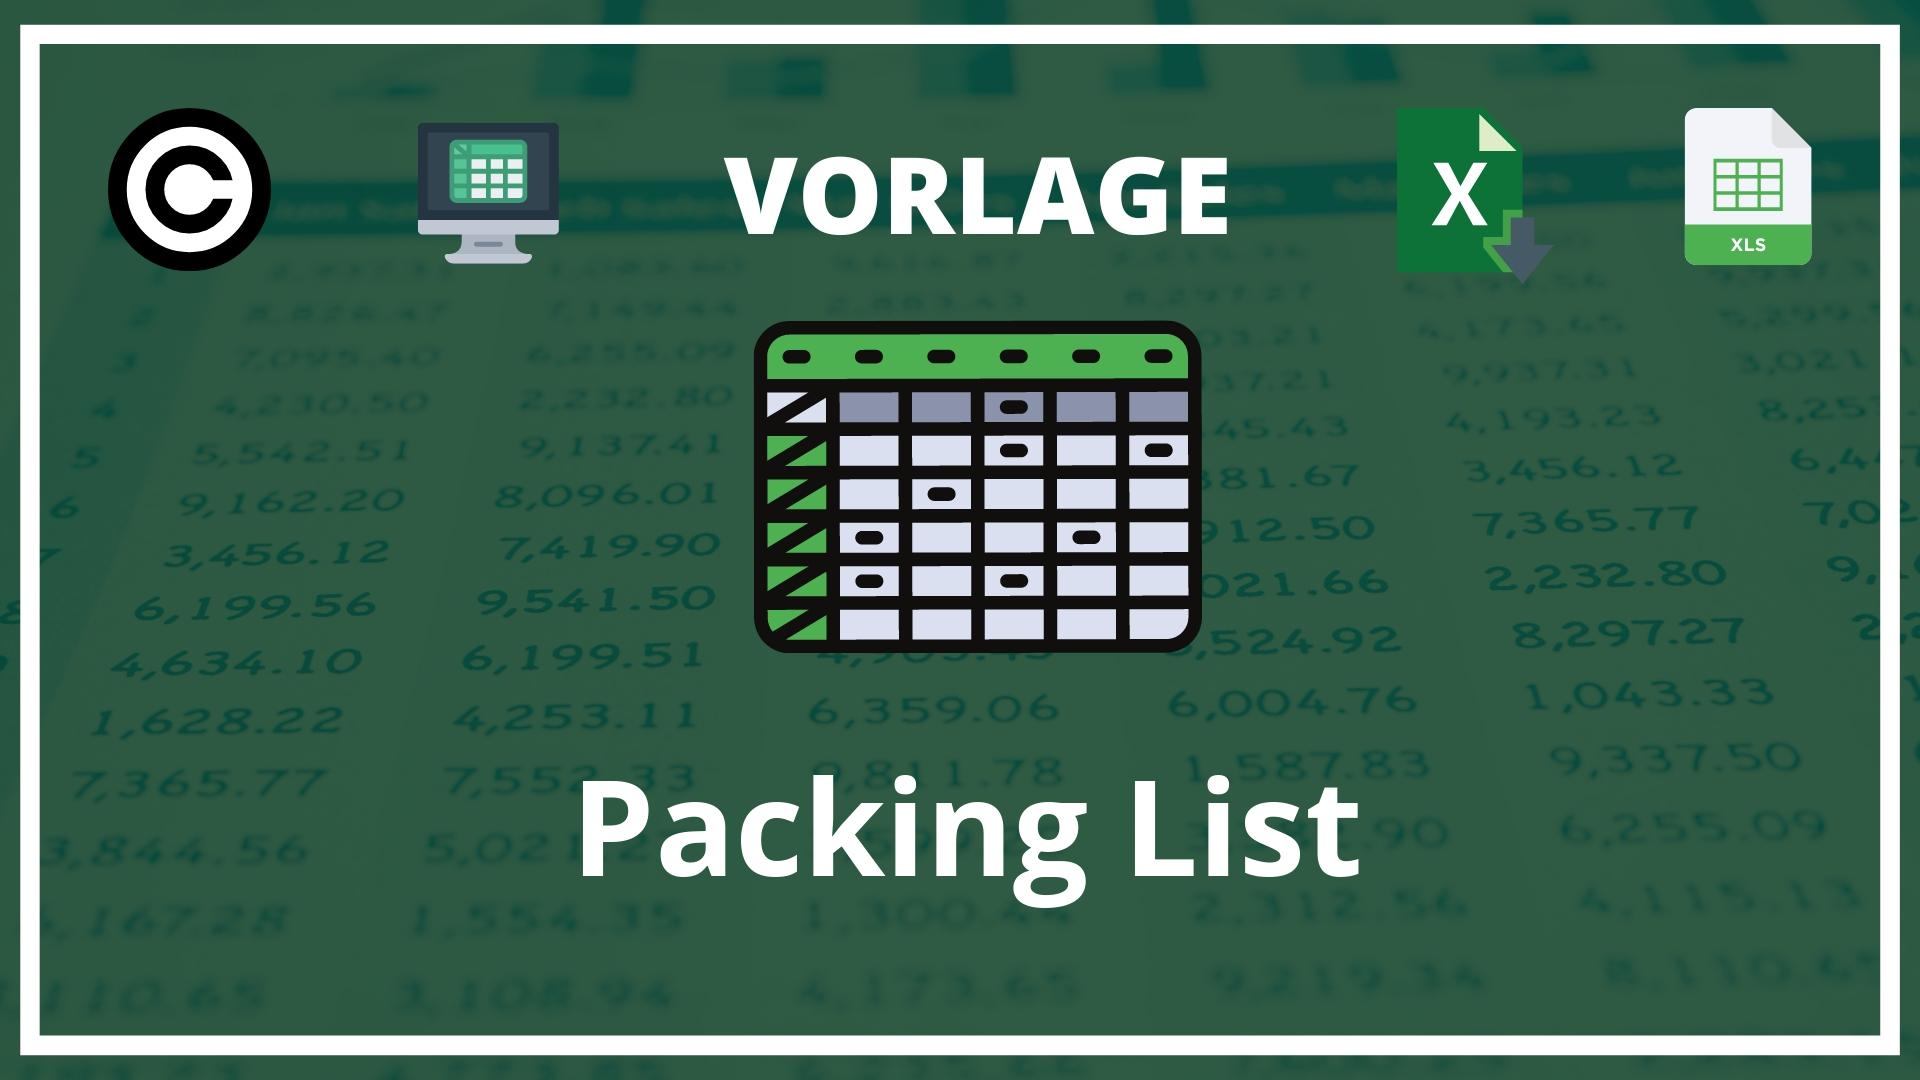 Packing List Vorlage Excel